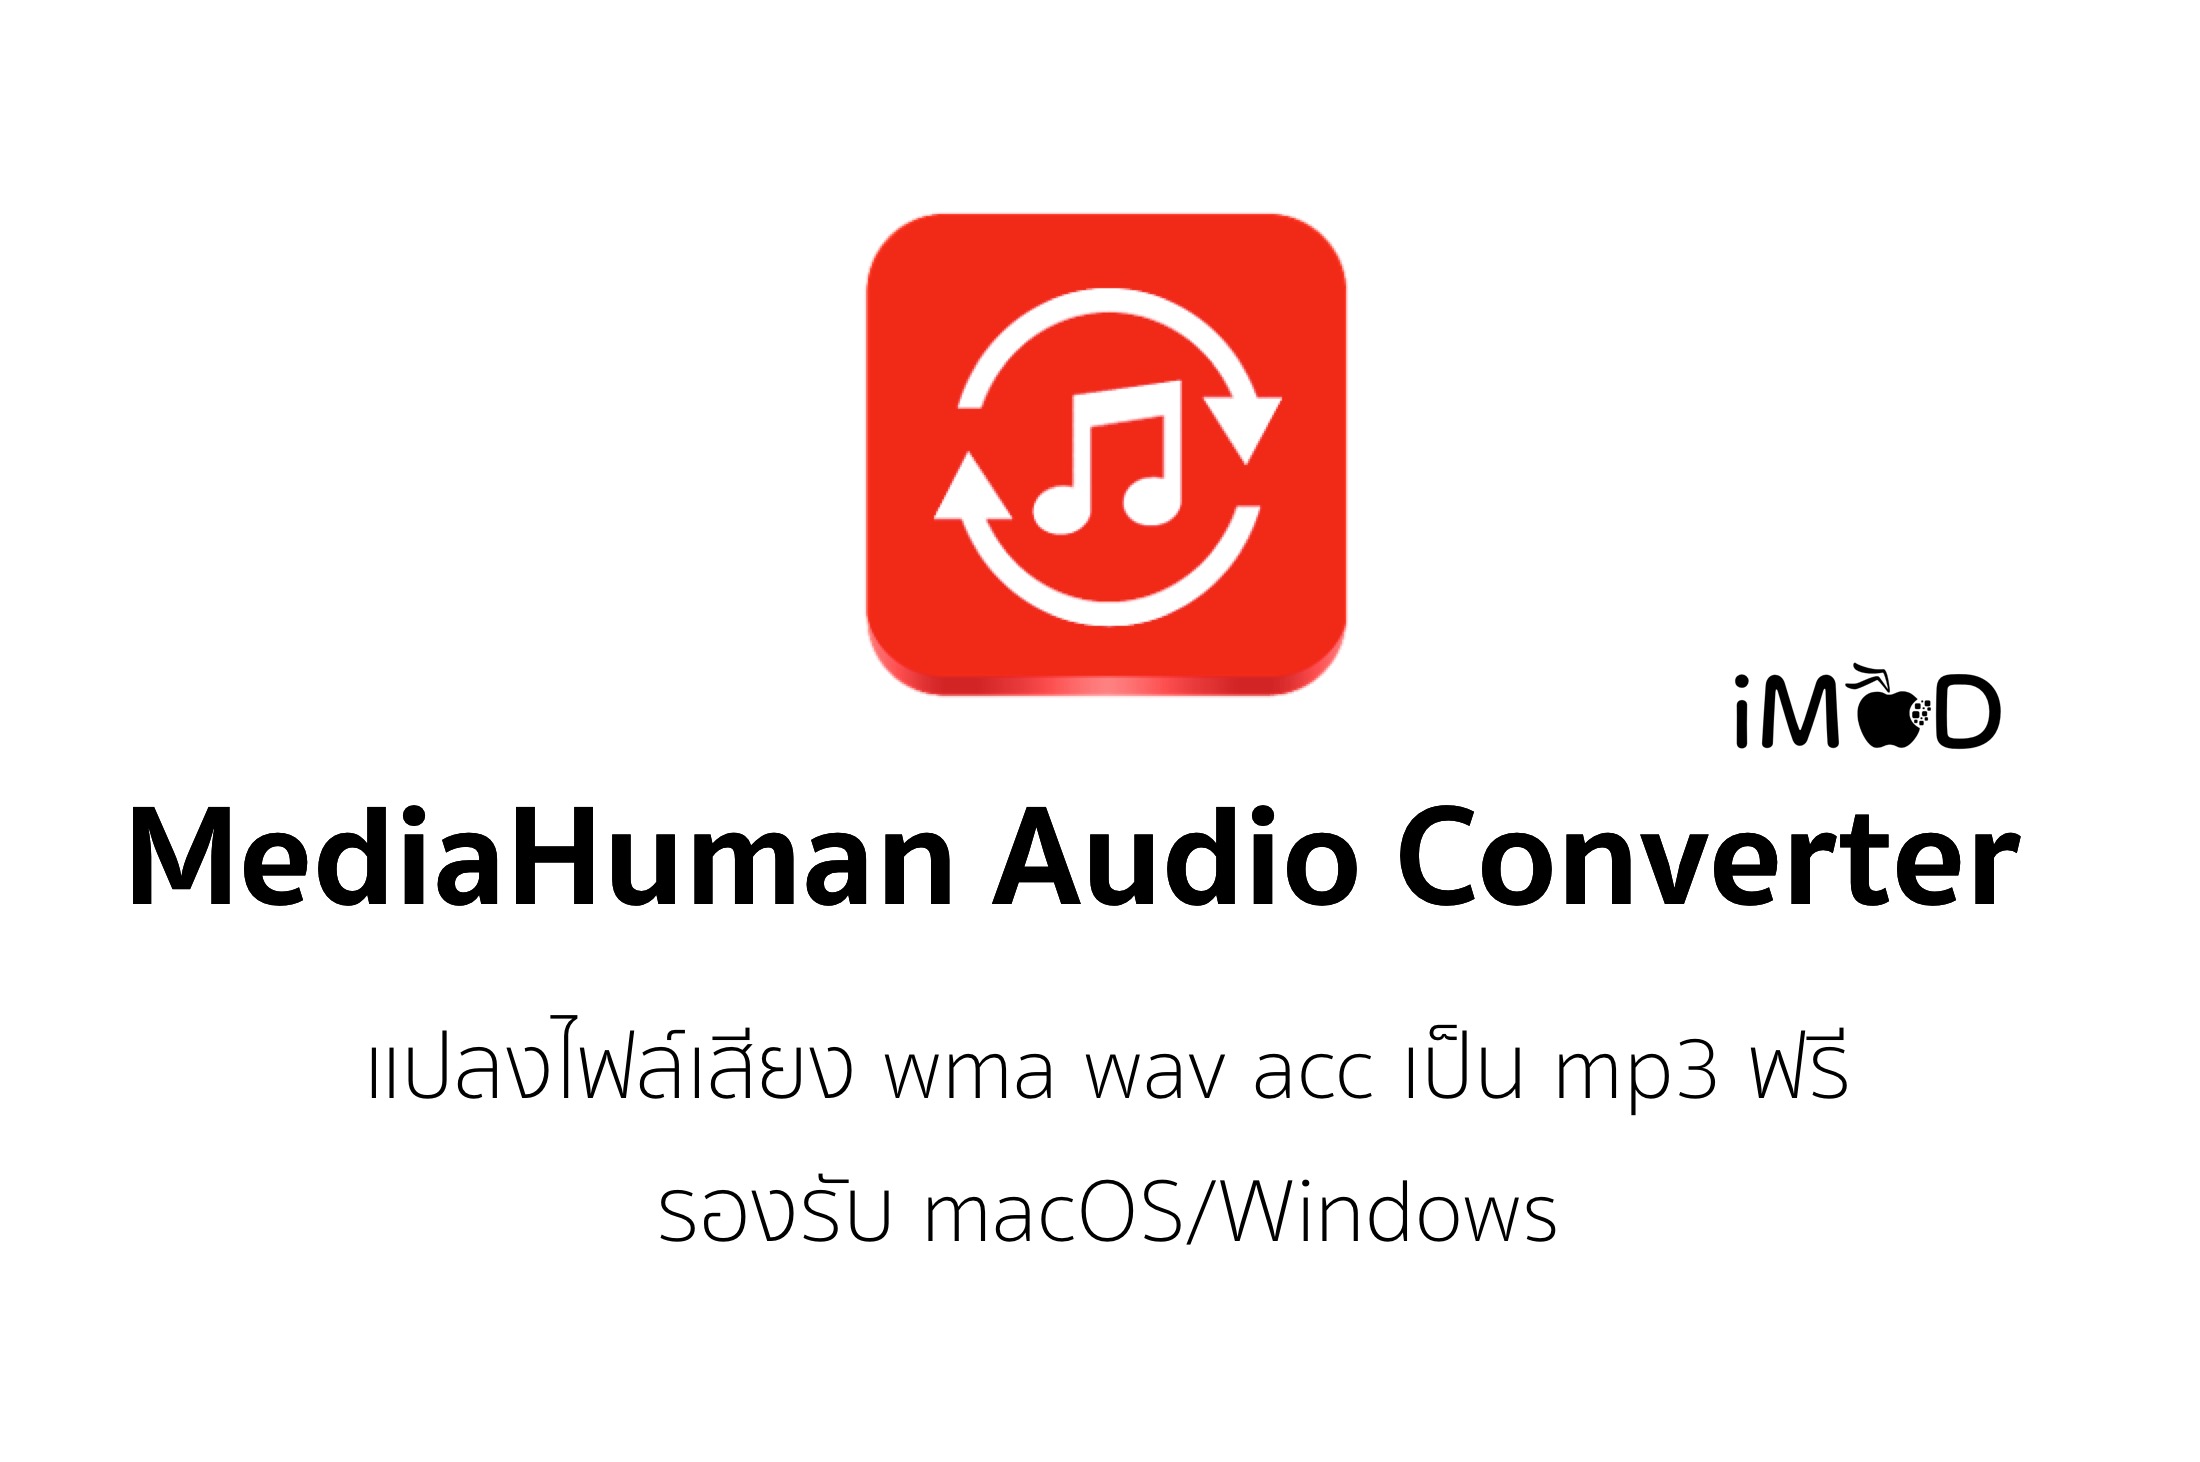 mediahuman audio converter for windows